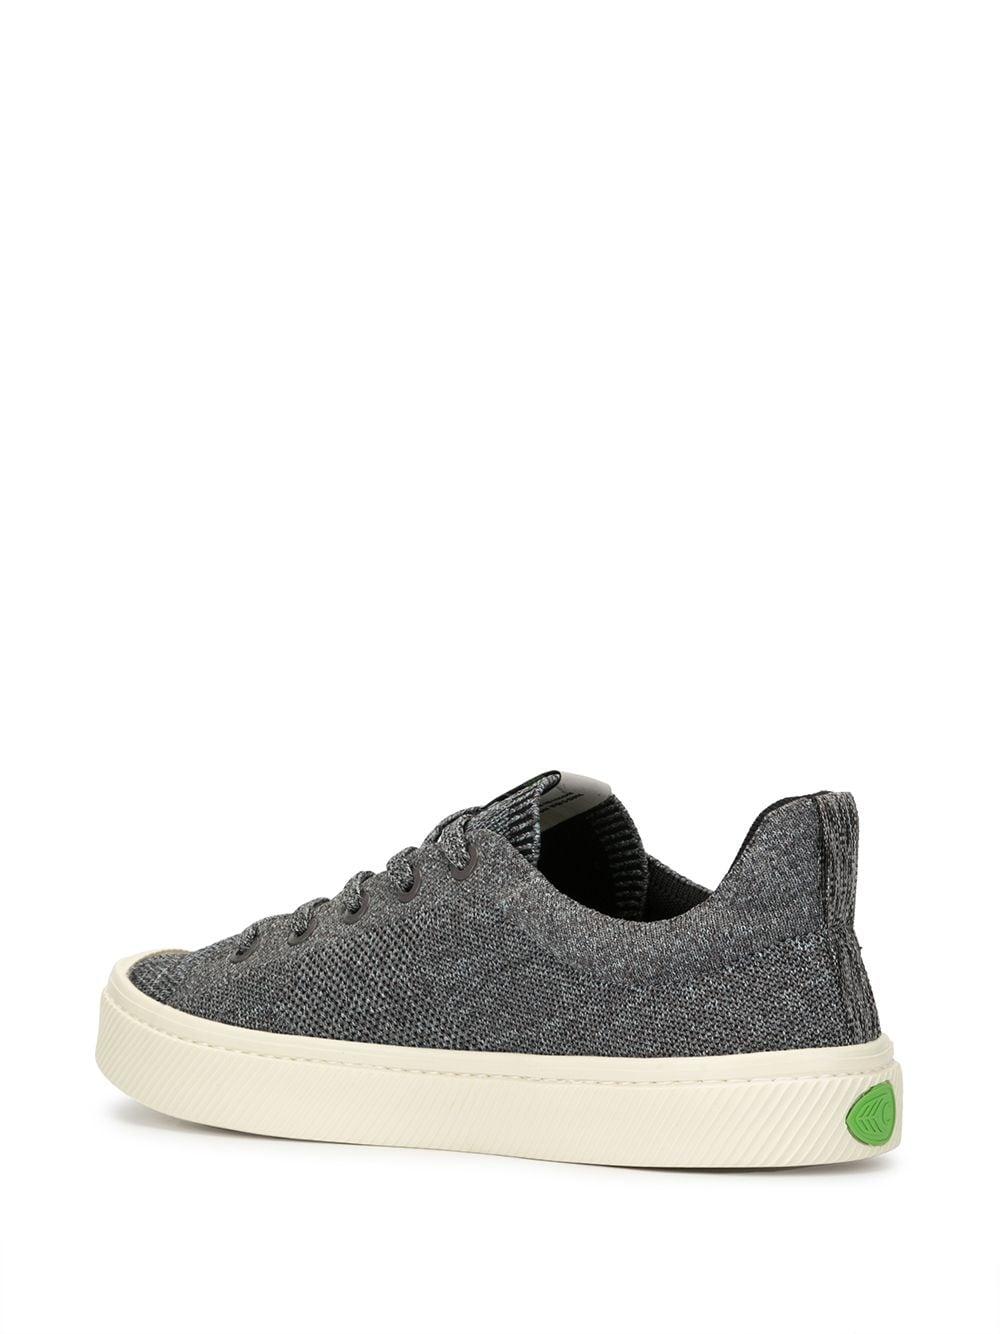 CARIUMA Ibi Low Stone Grey Knit Sneaker in Gray for Men - Lyst